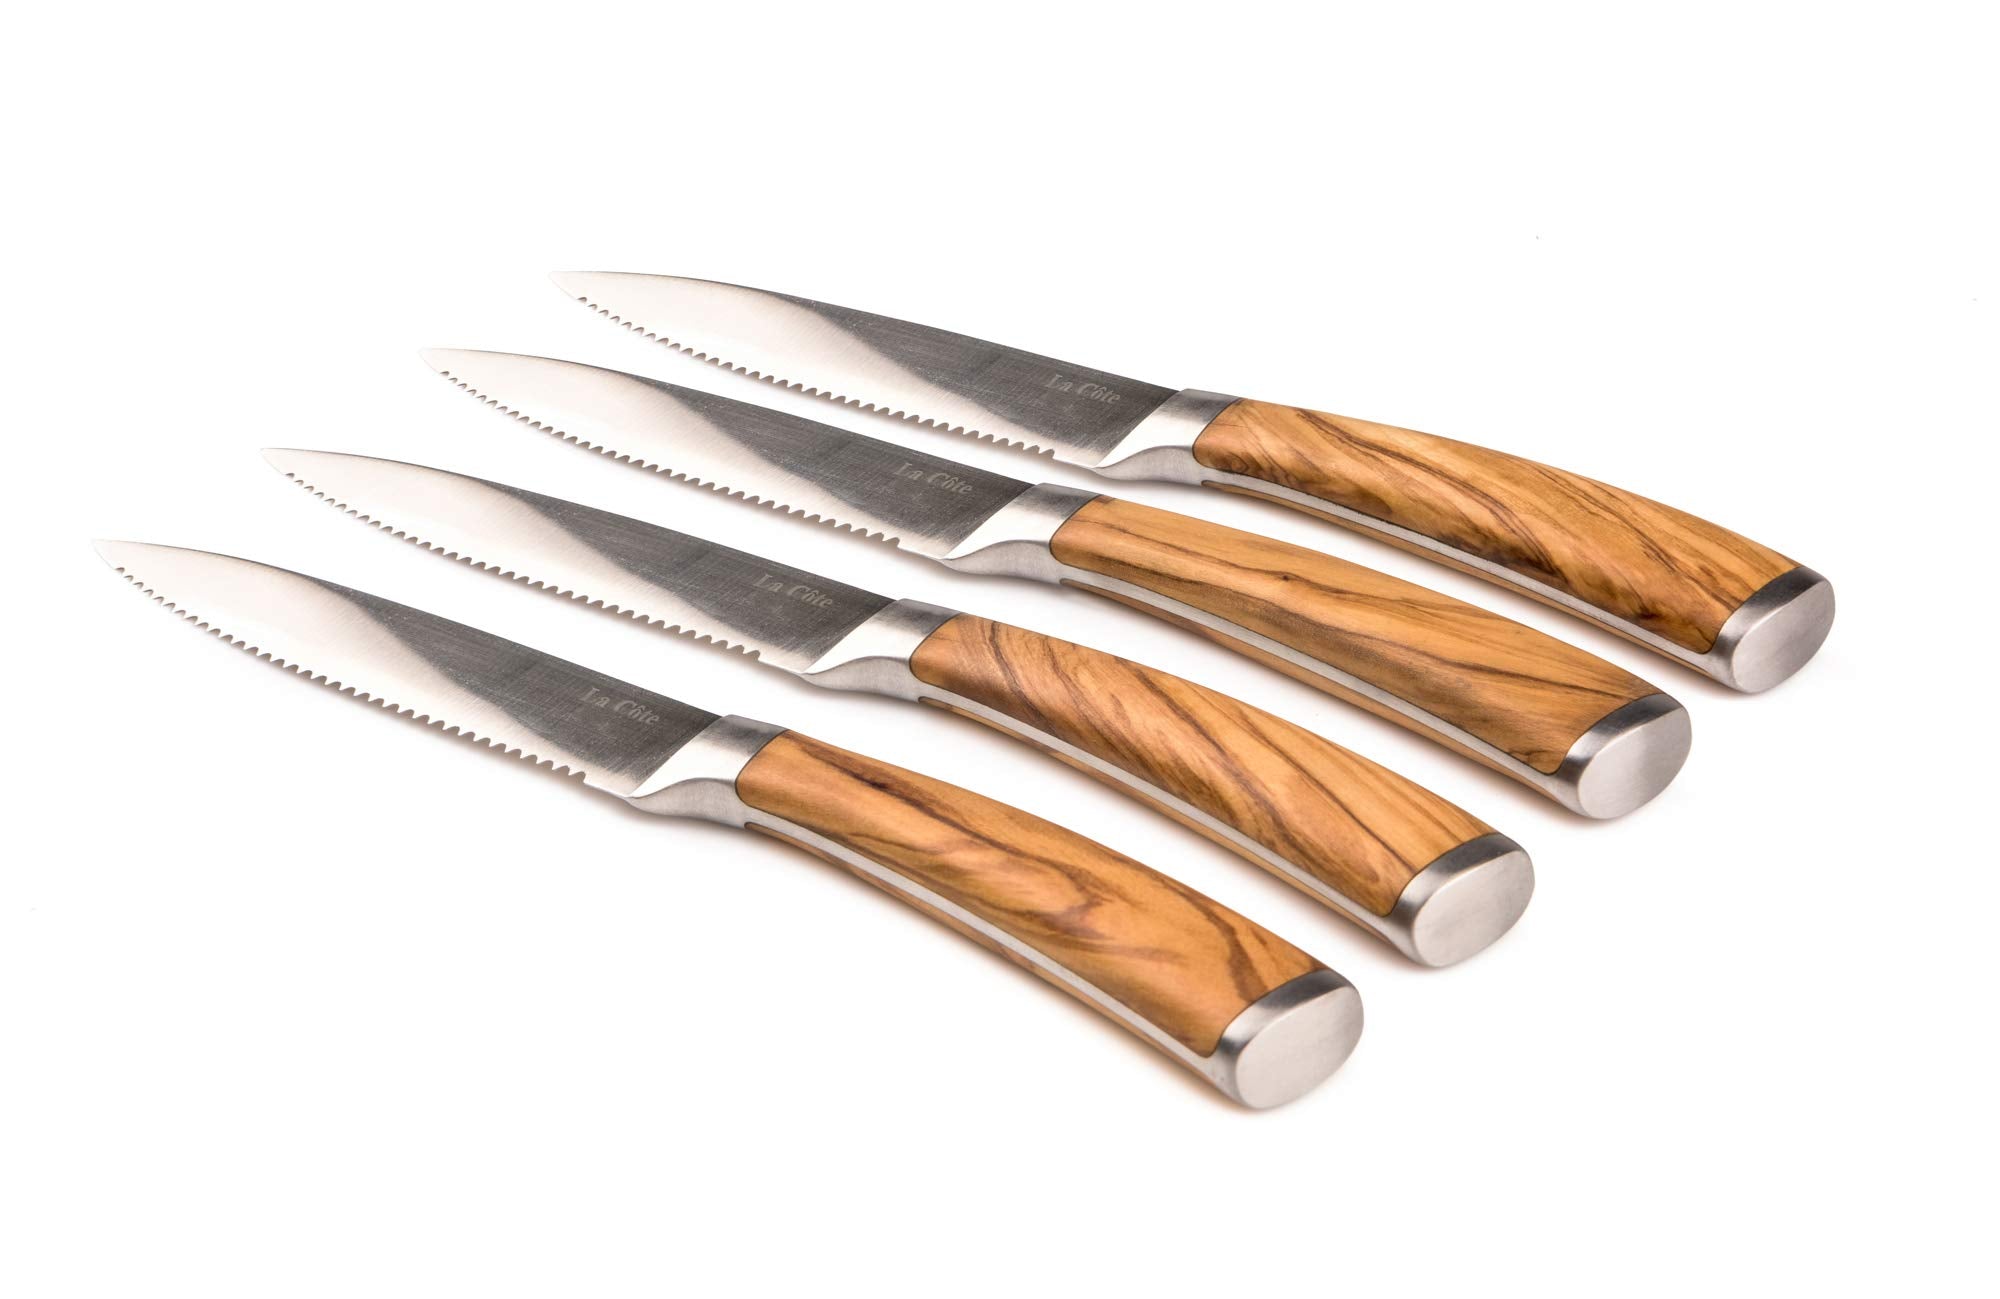 La Cote 4 Piece Steak Knives Set Japanese Stainless Steel Olive Wood Handle In Gift Box (4 PC Steak Knife Set - Olive Wood)